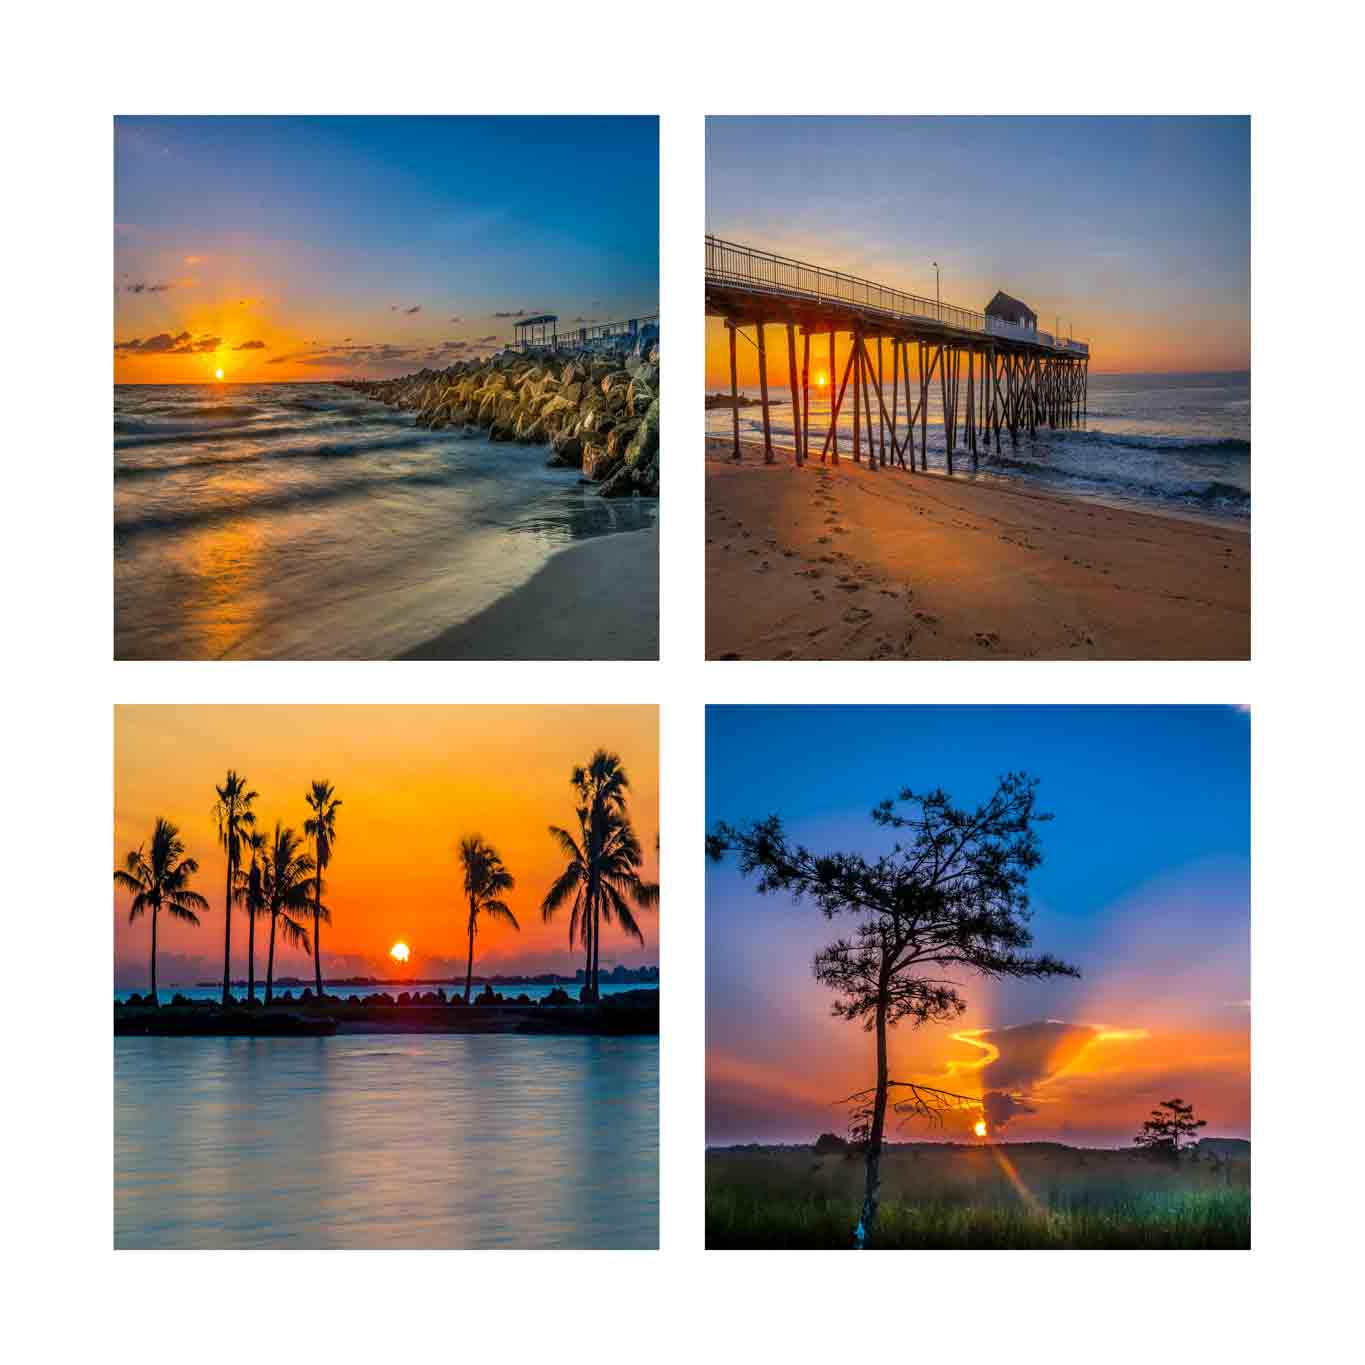 A 4 photograph set of beautiful sunrises